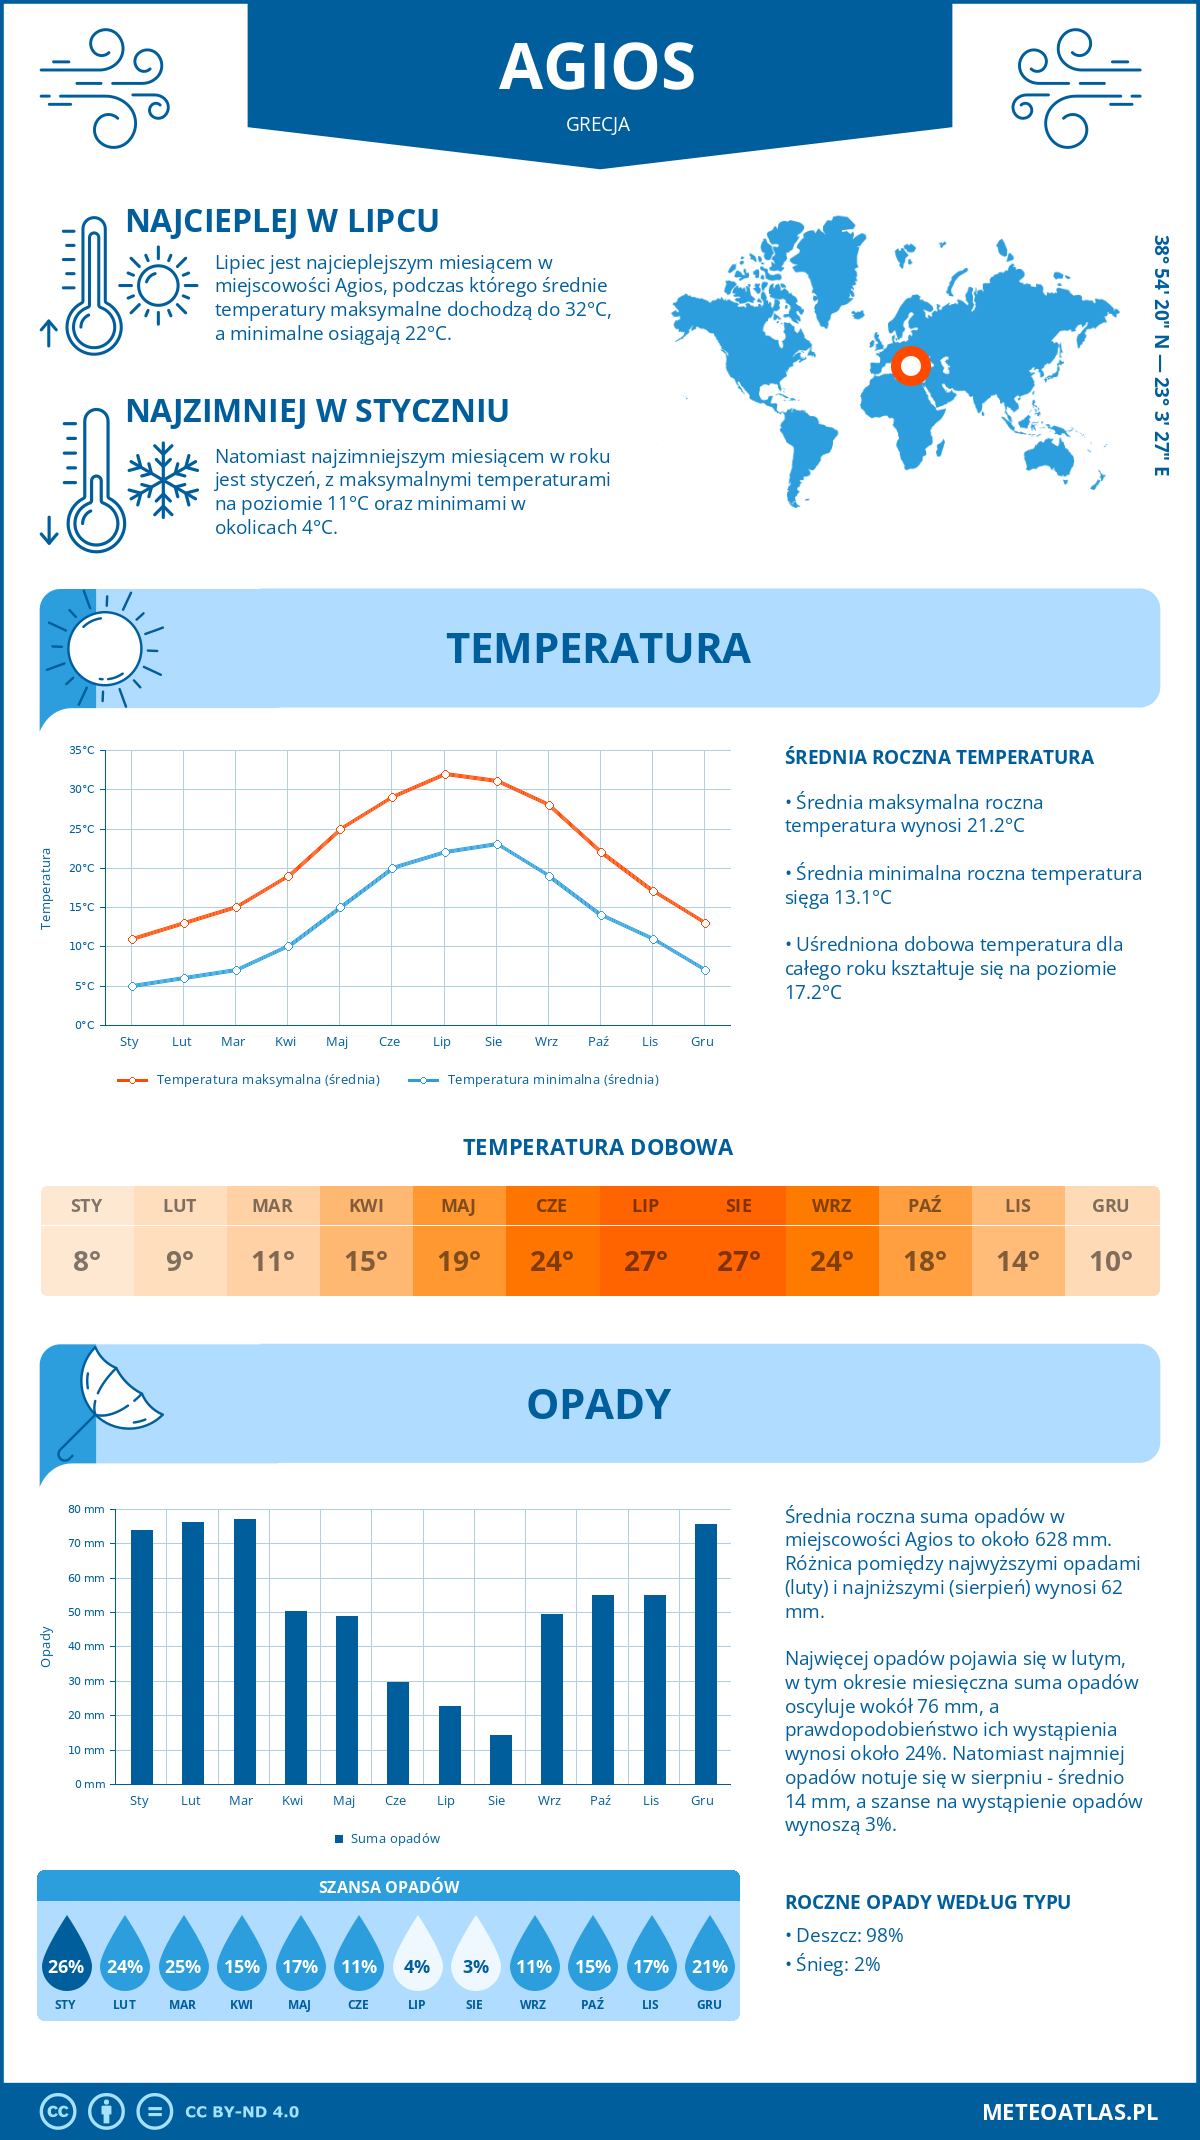 Pogoda Agios (Grecja). Temperatura oraz opady.